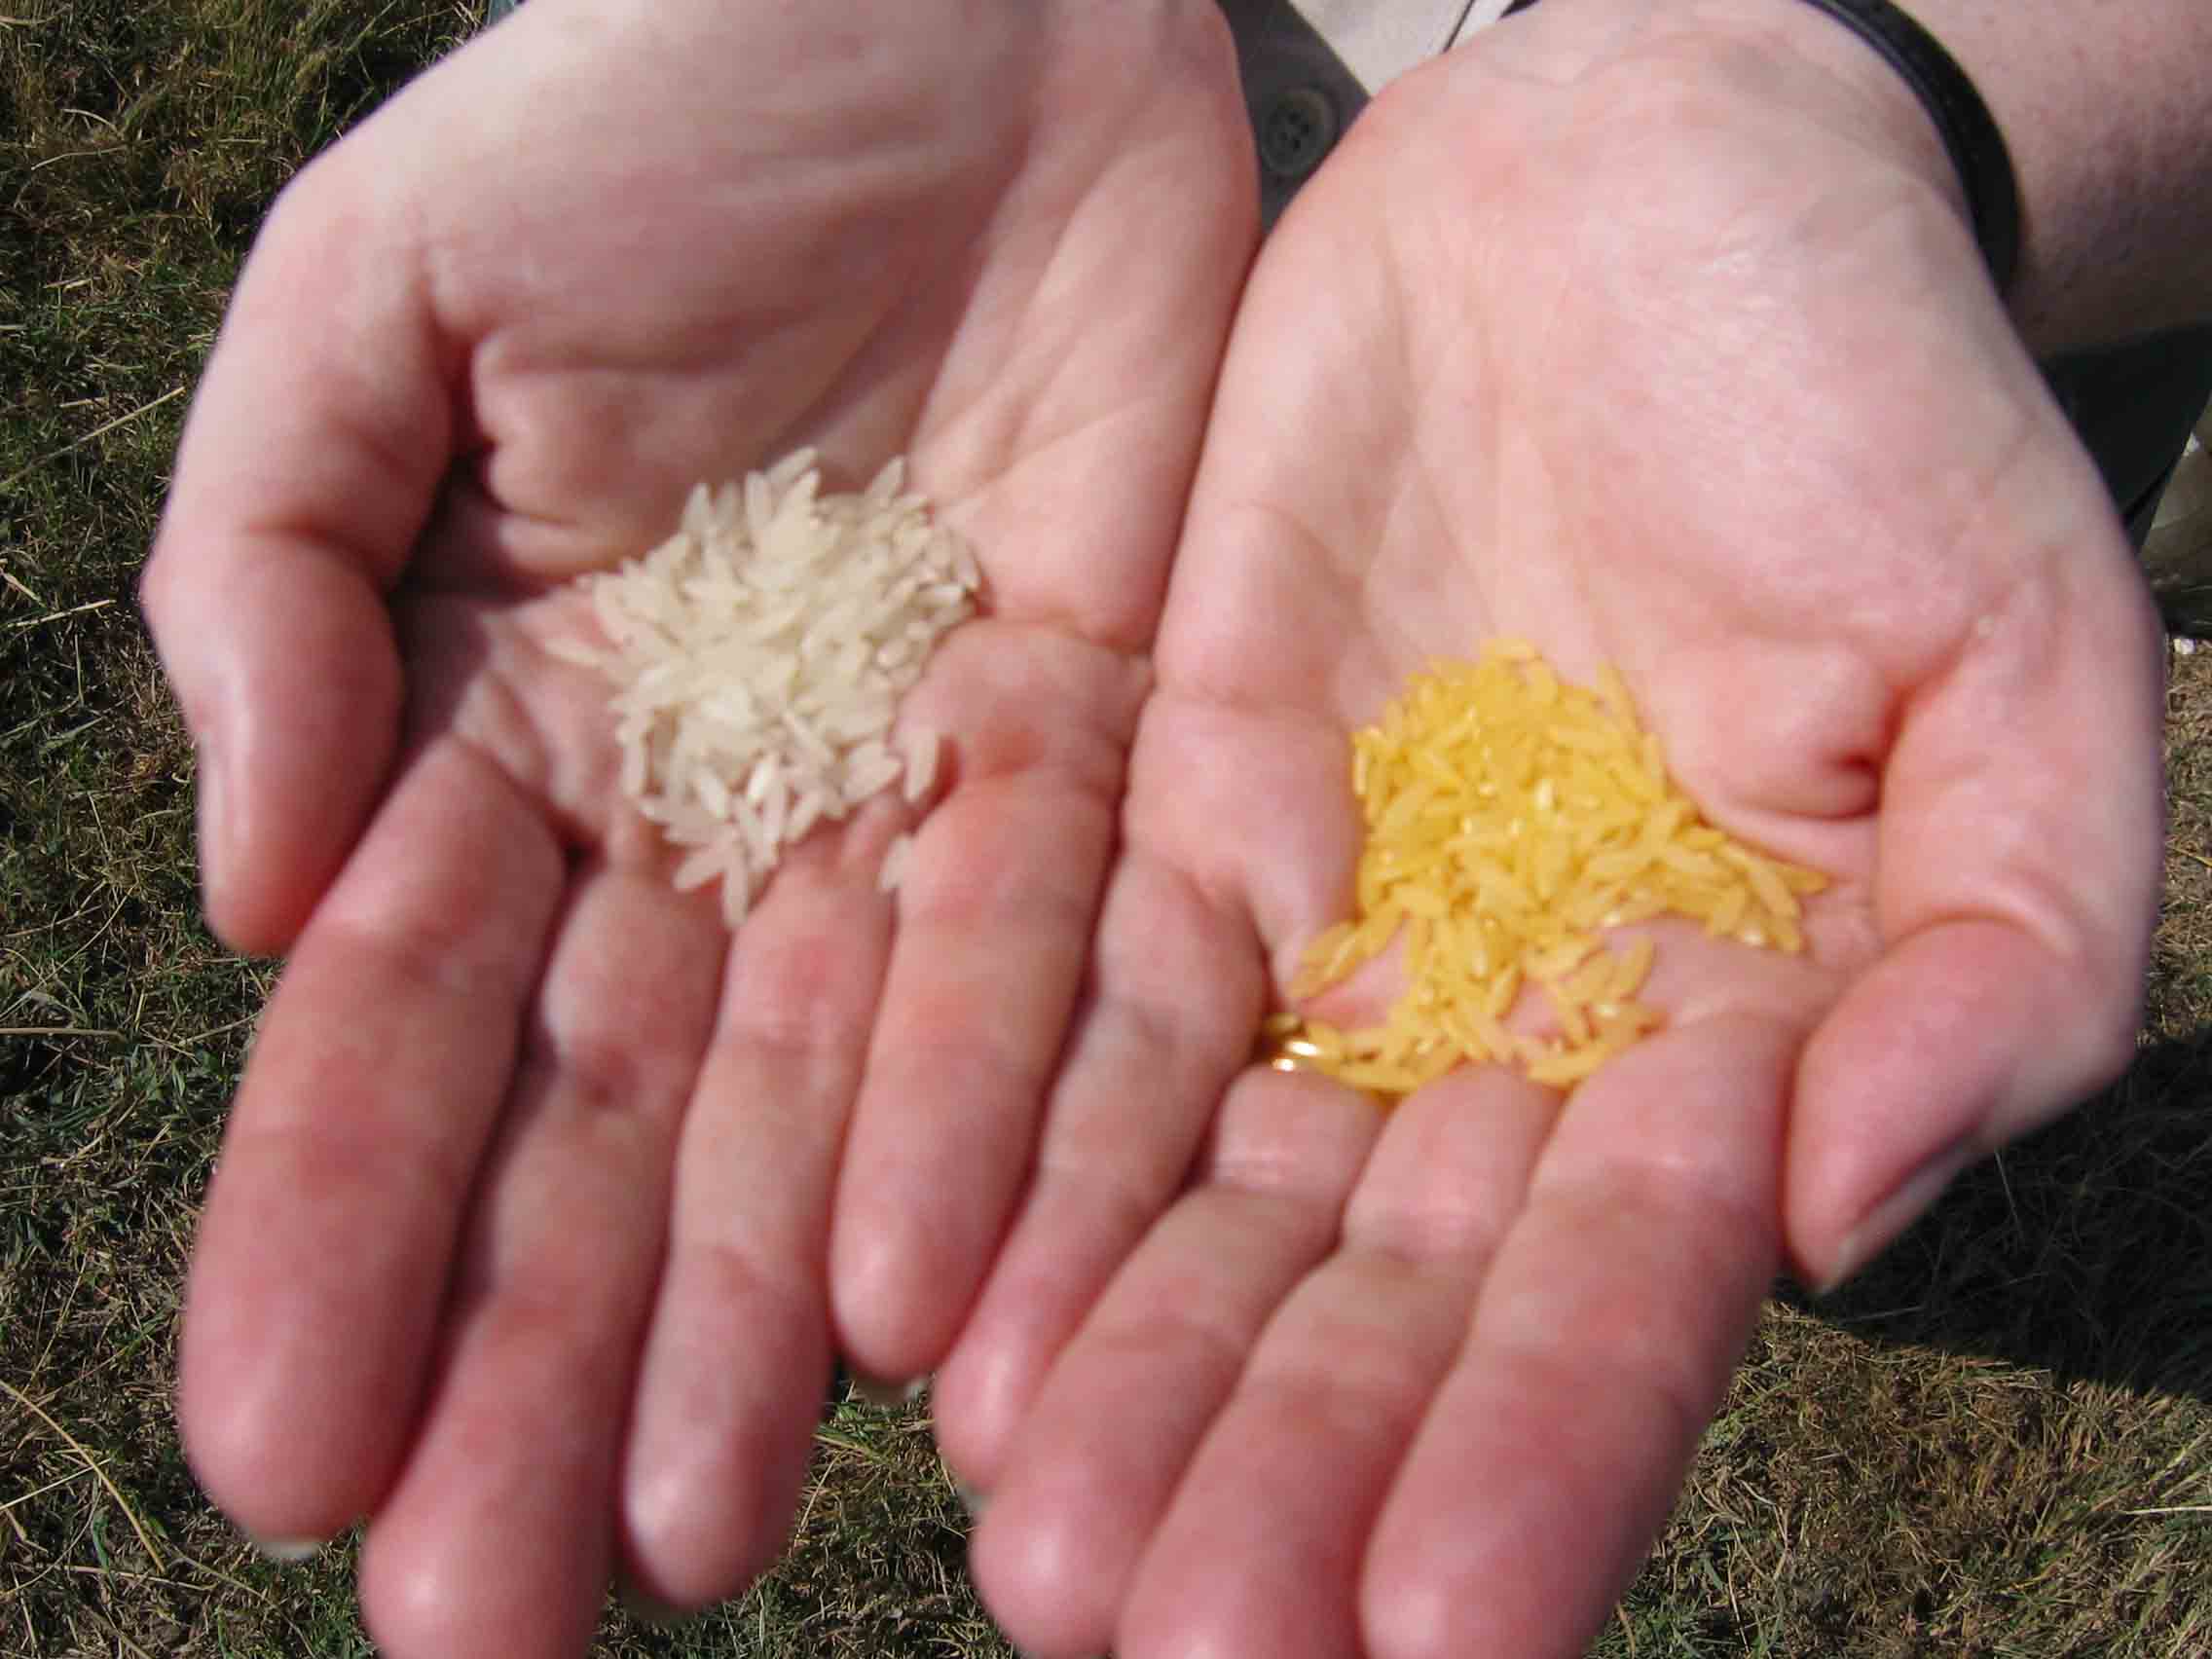 Golden Rice within reach